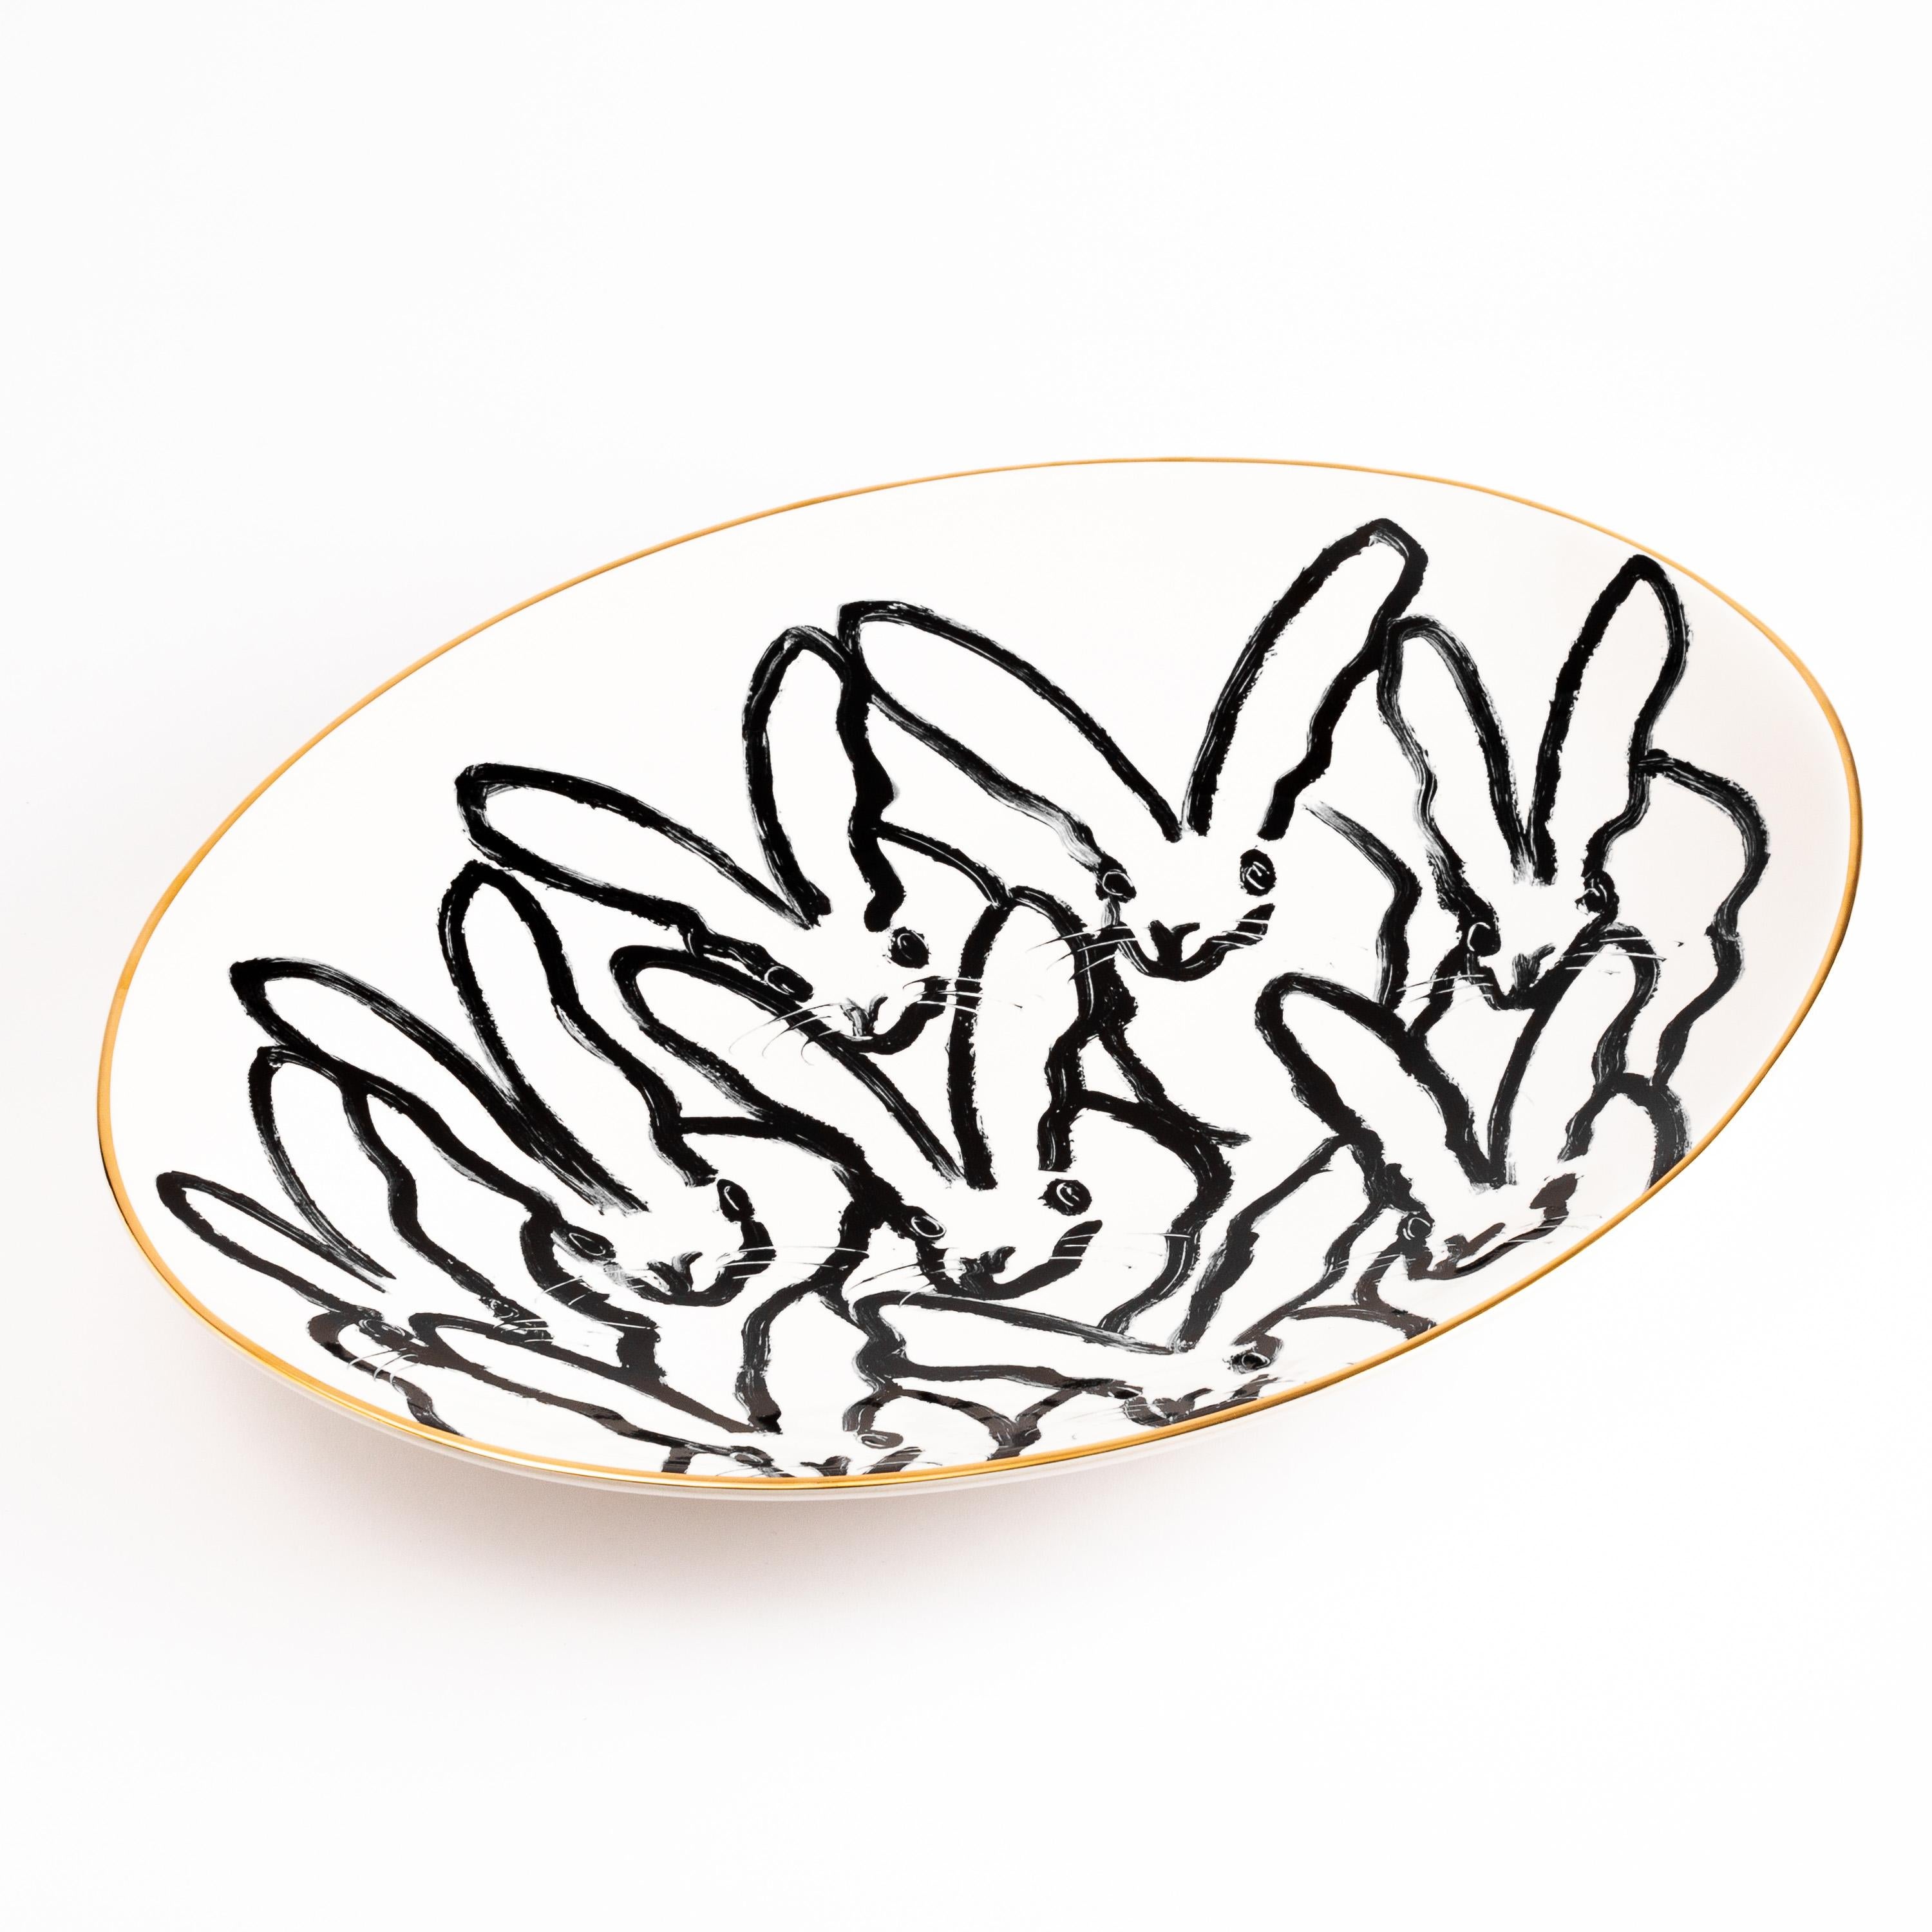 Rabbit Run Serving Platter - Art by Hunt Slonem